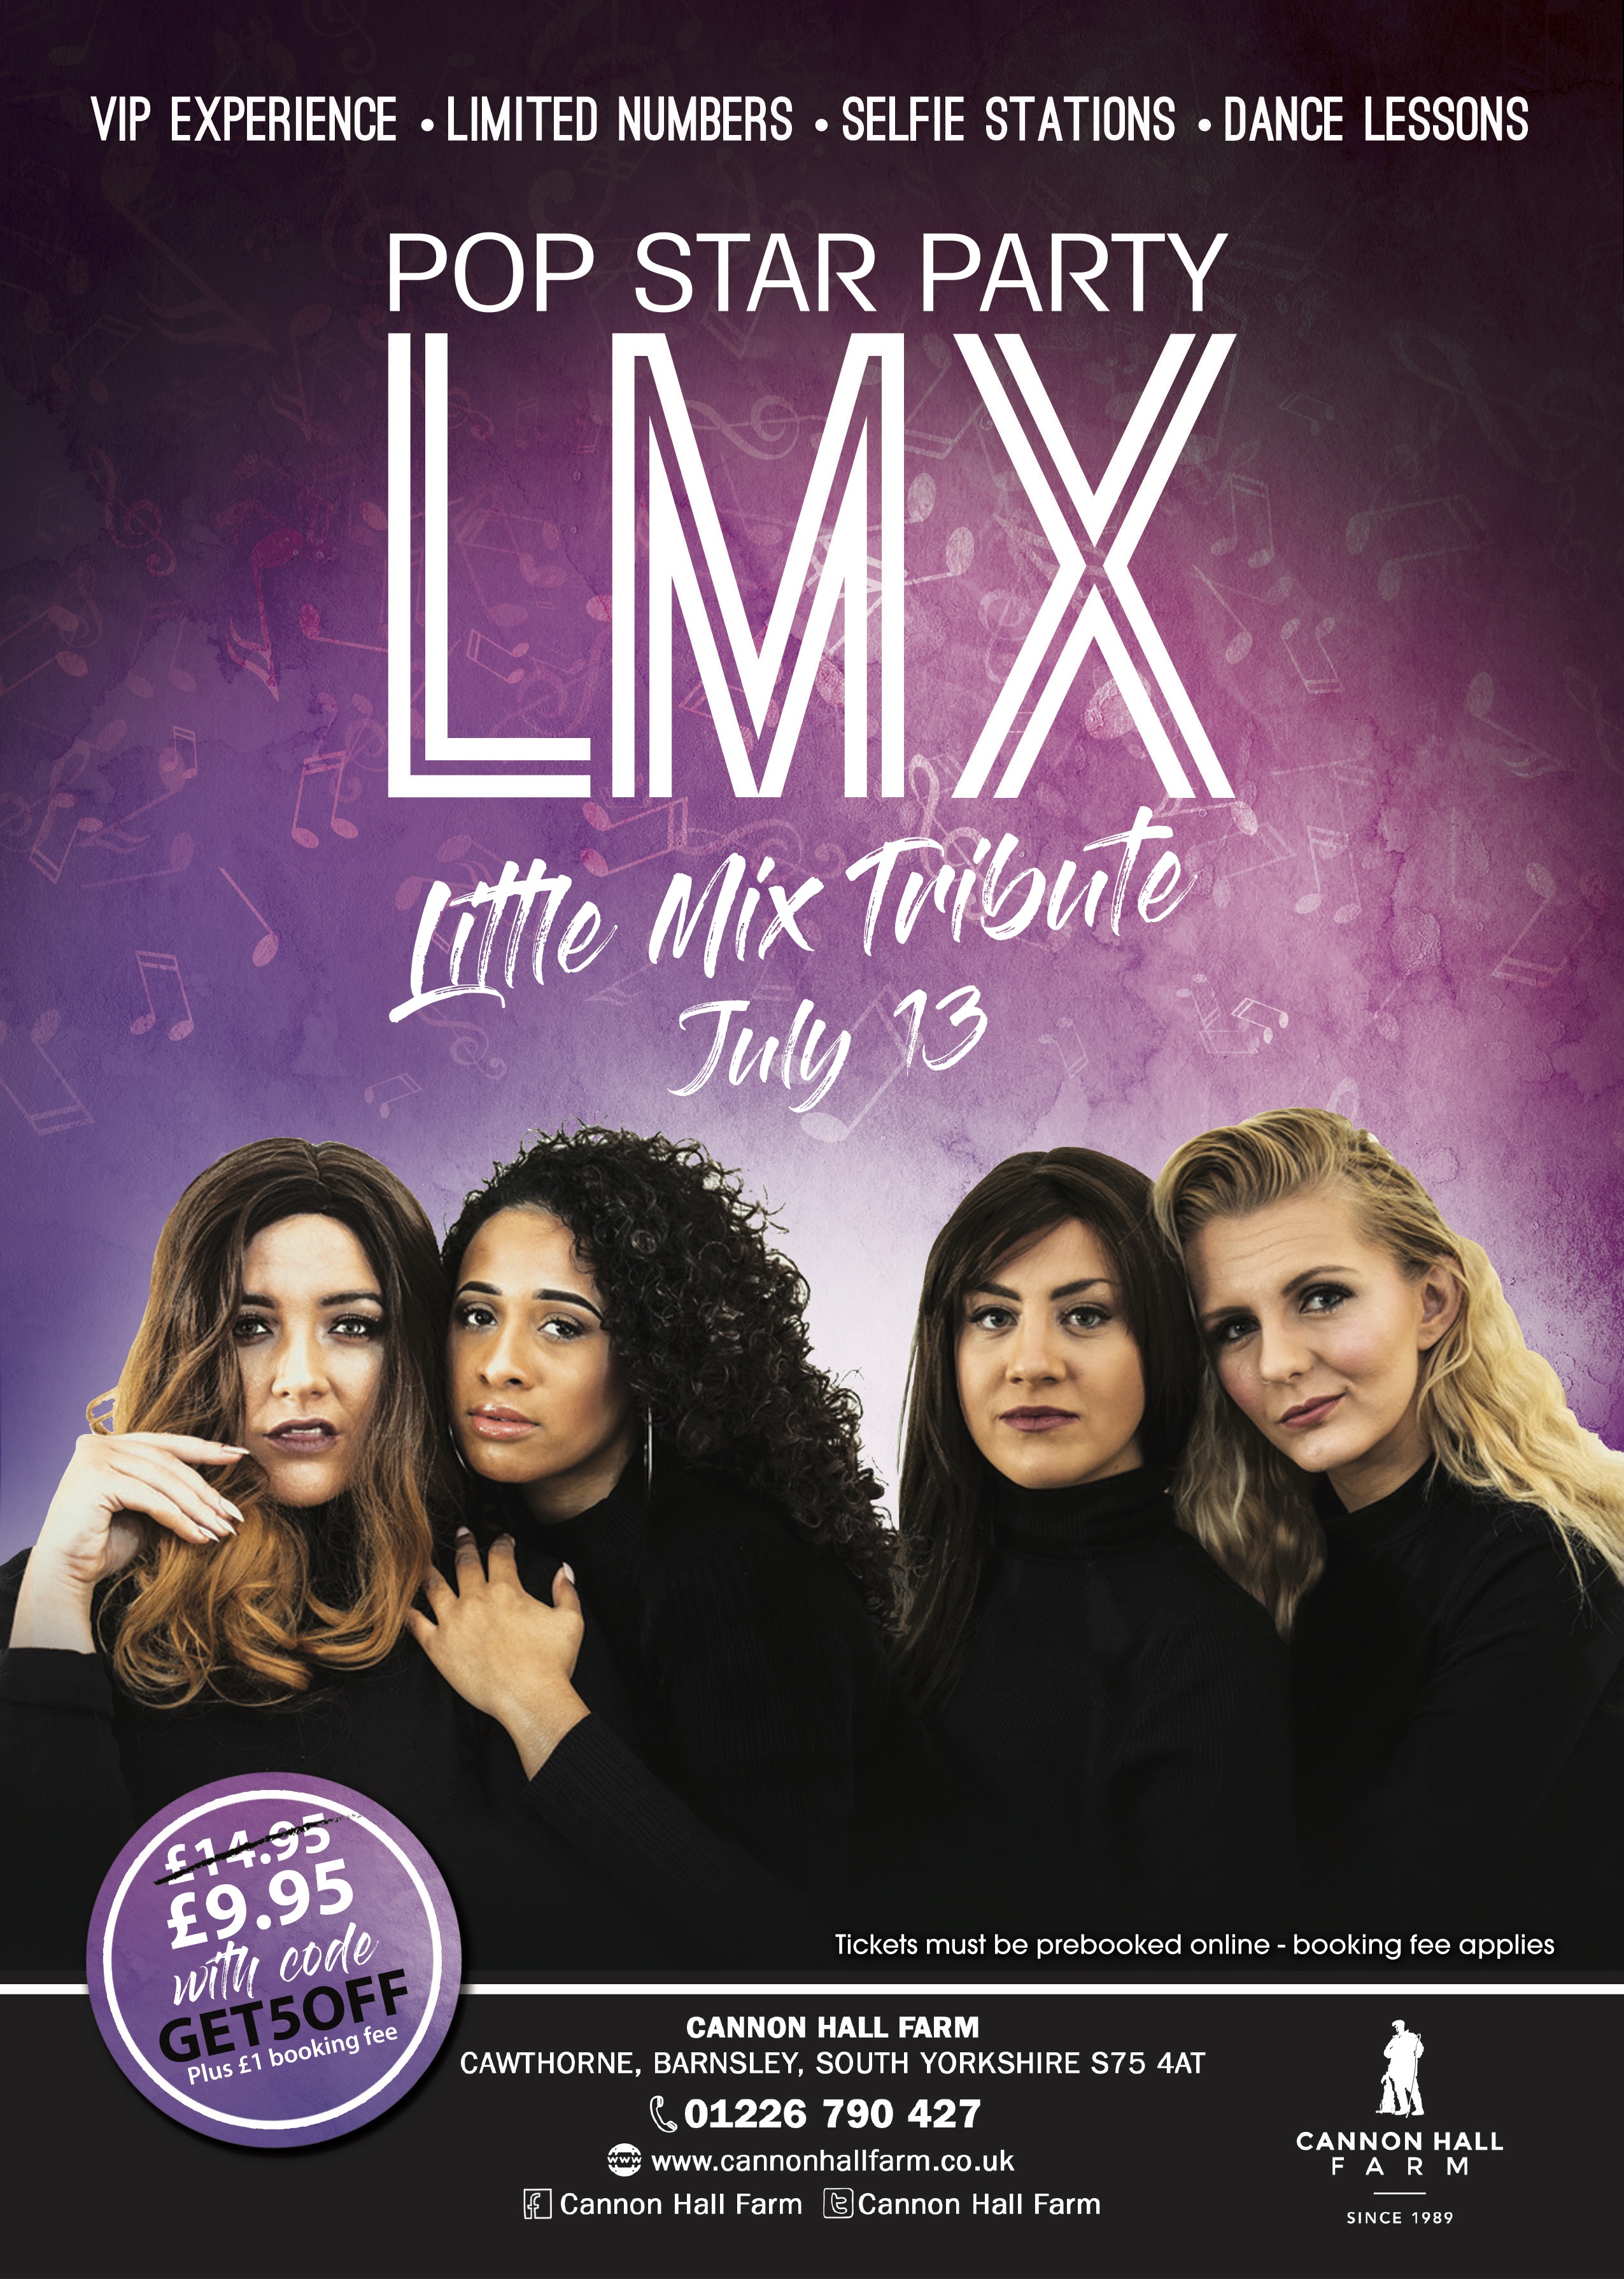 Little Mix Tribute web